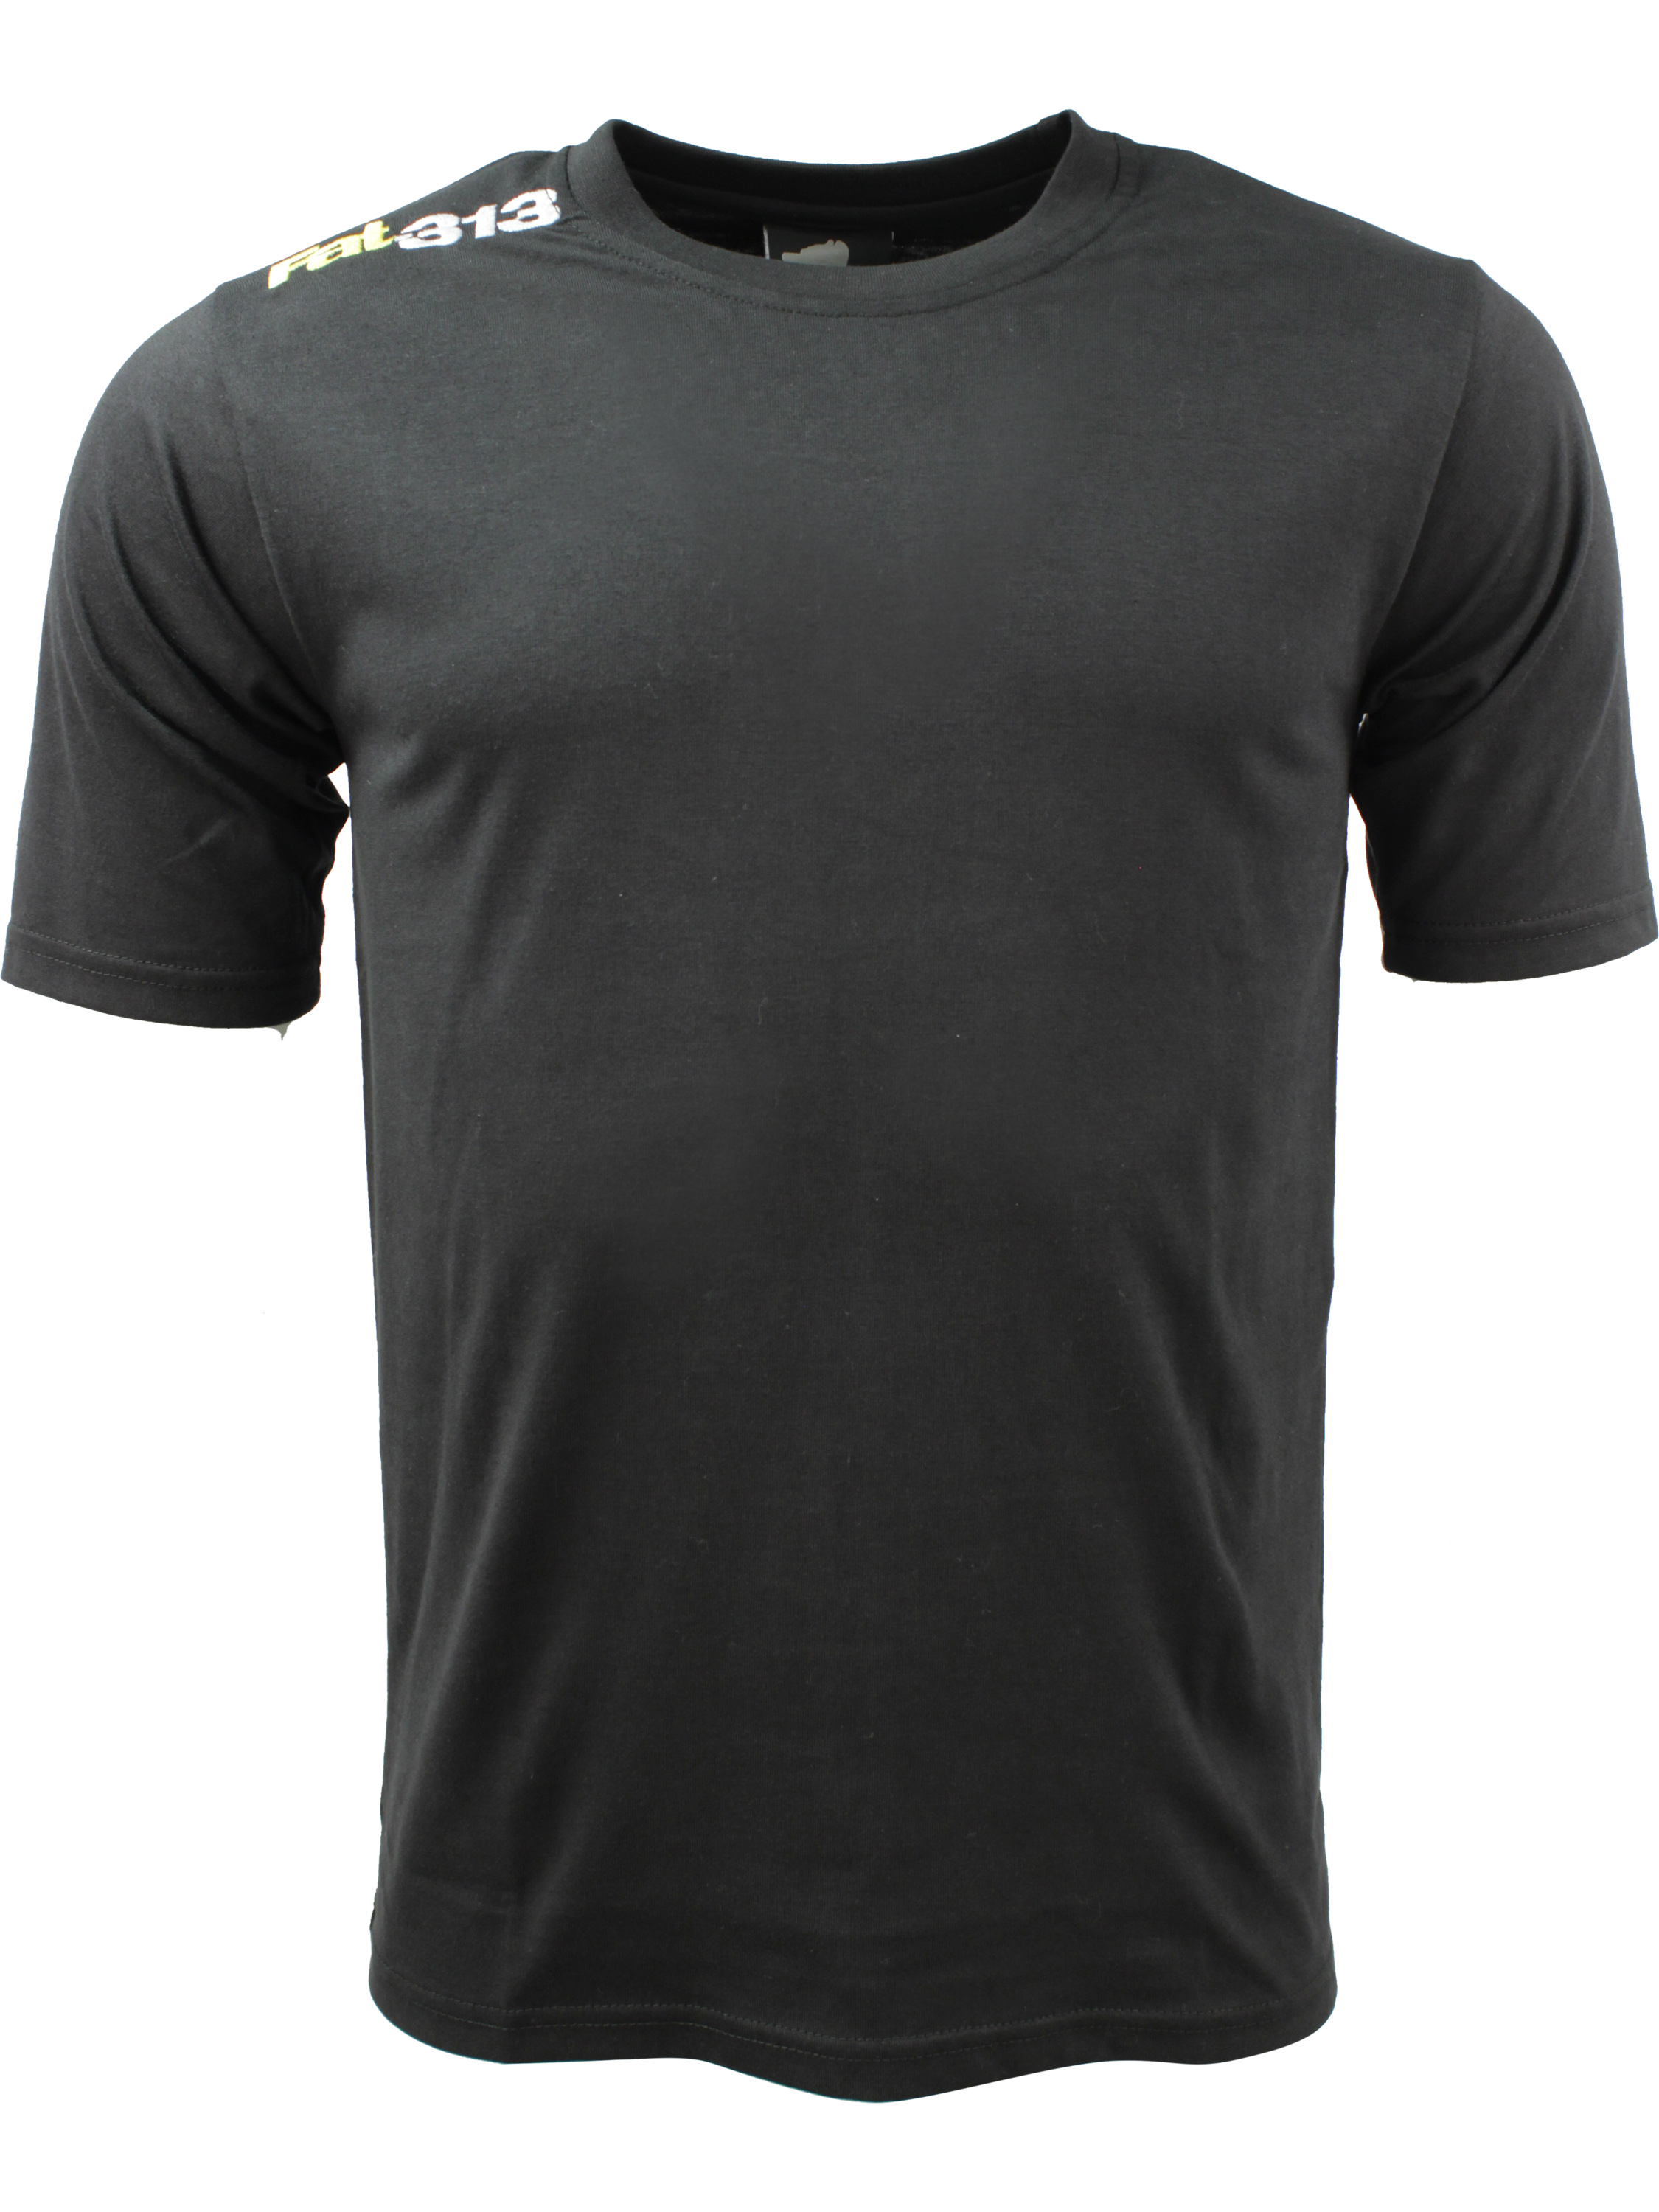 Buy FAT 313 'Glory' T-shirt - Black